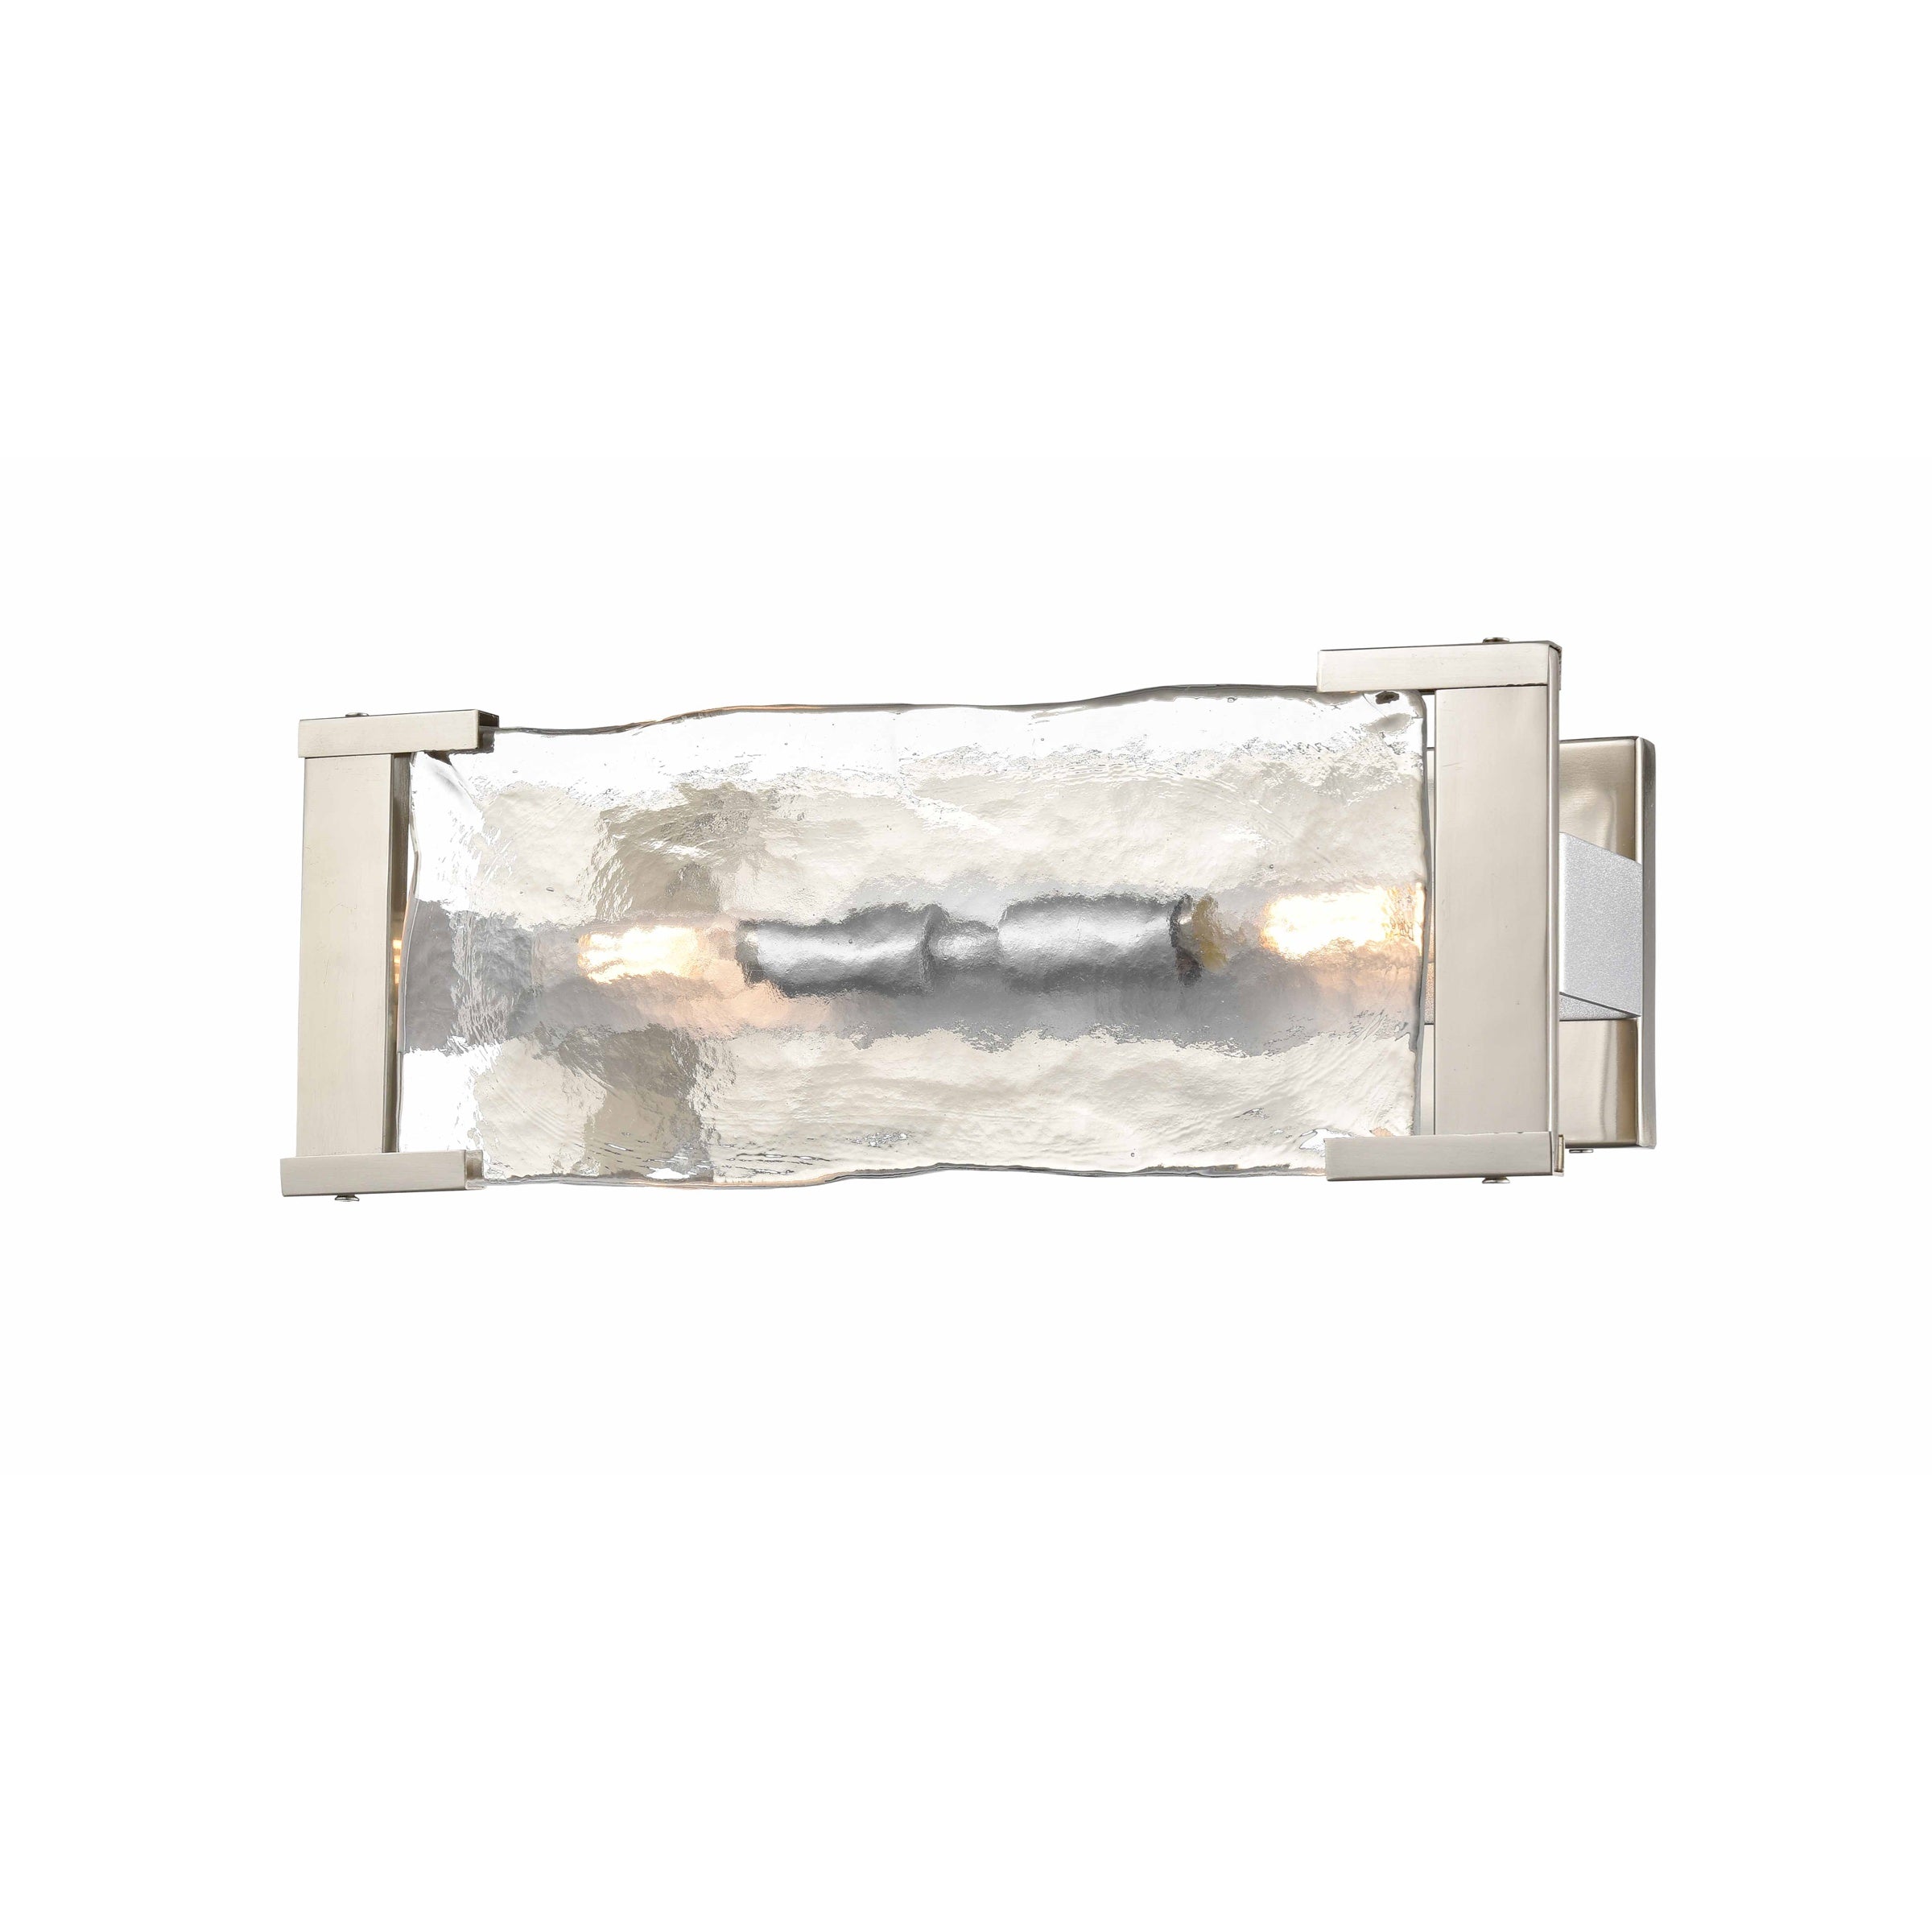 Georgian Bay Vanity Light Chrome and Buffed Nickel with Artisinal Water Glass